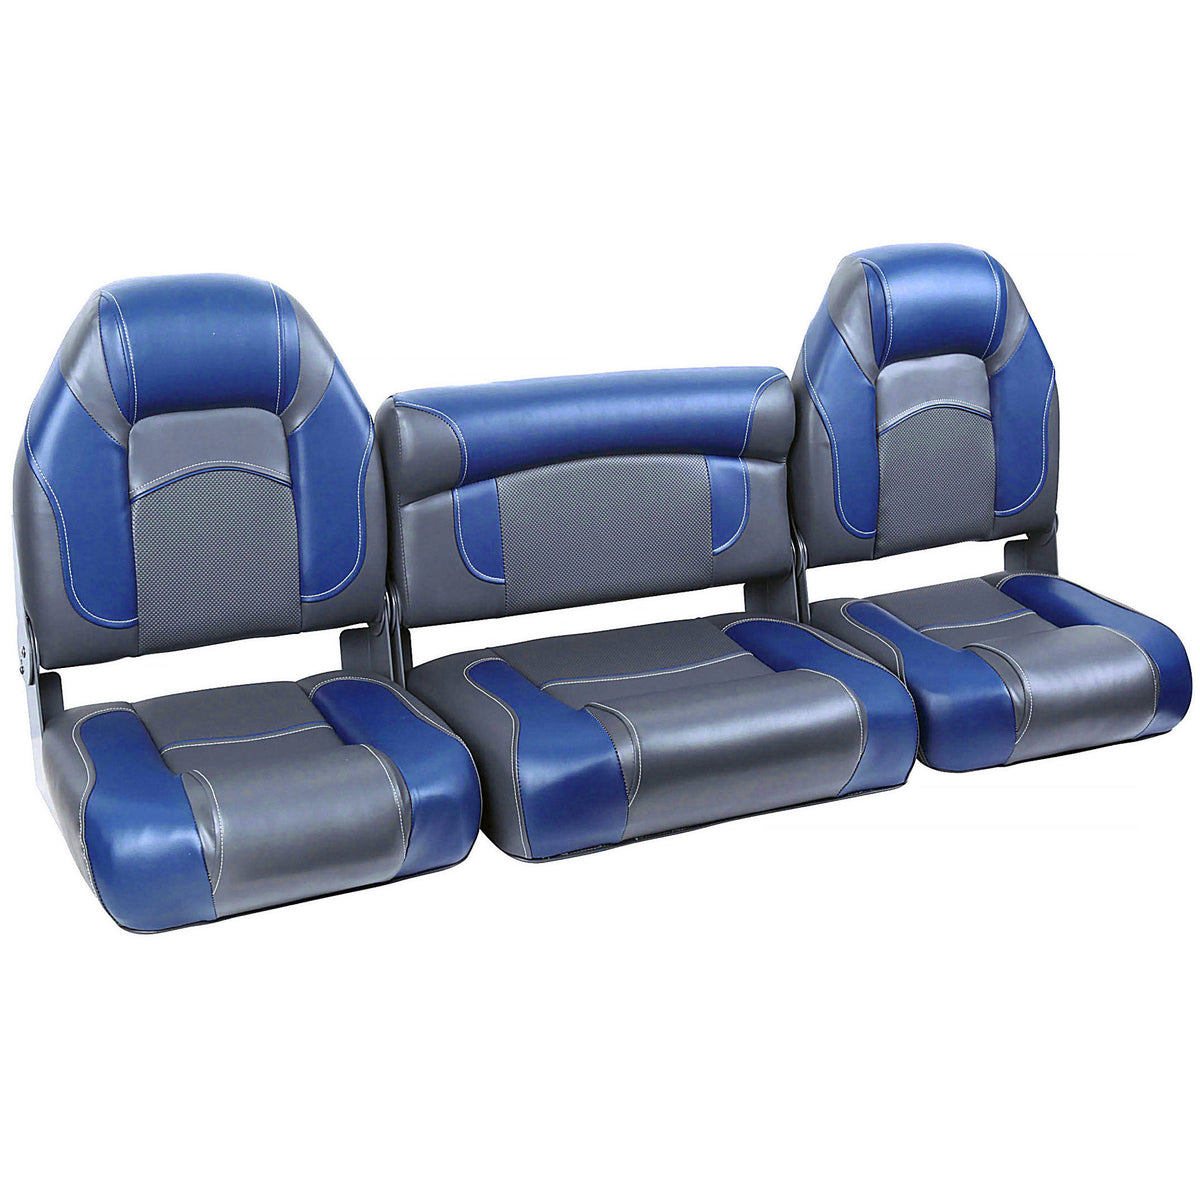 59 BASS BOAT BENCH SEAT – Boat Seats